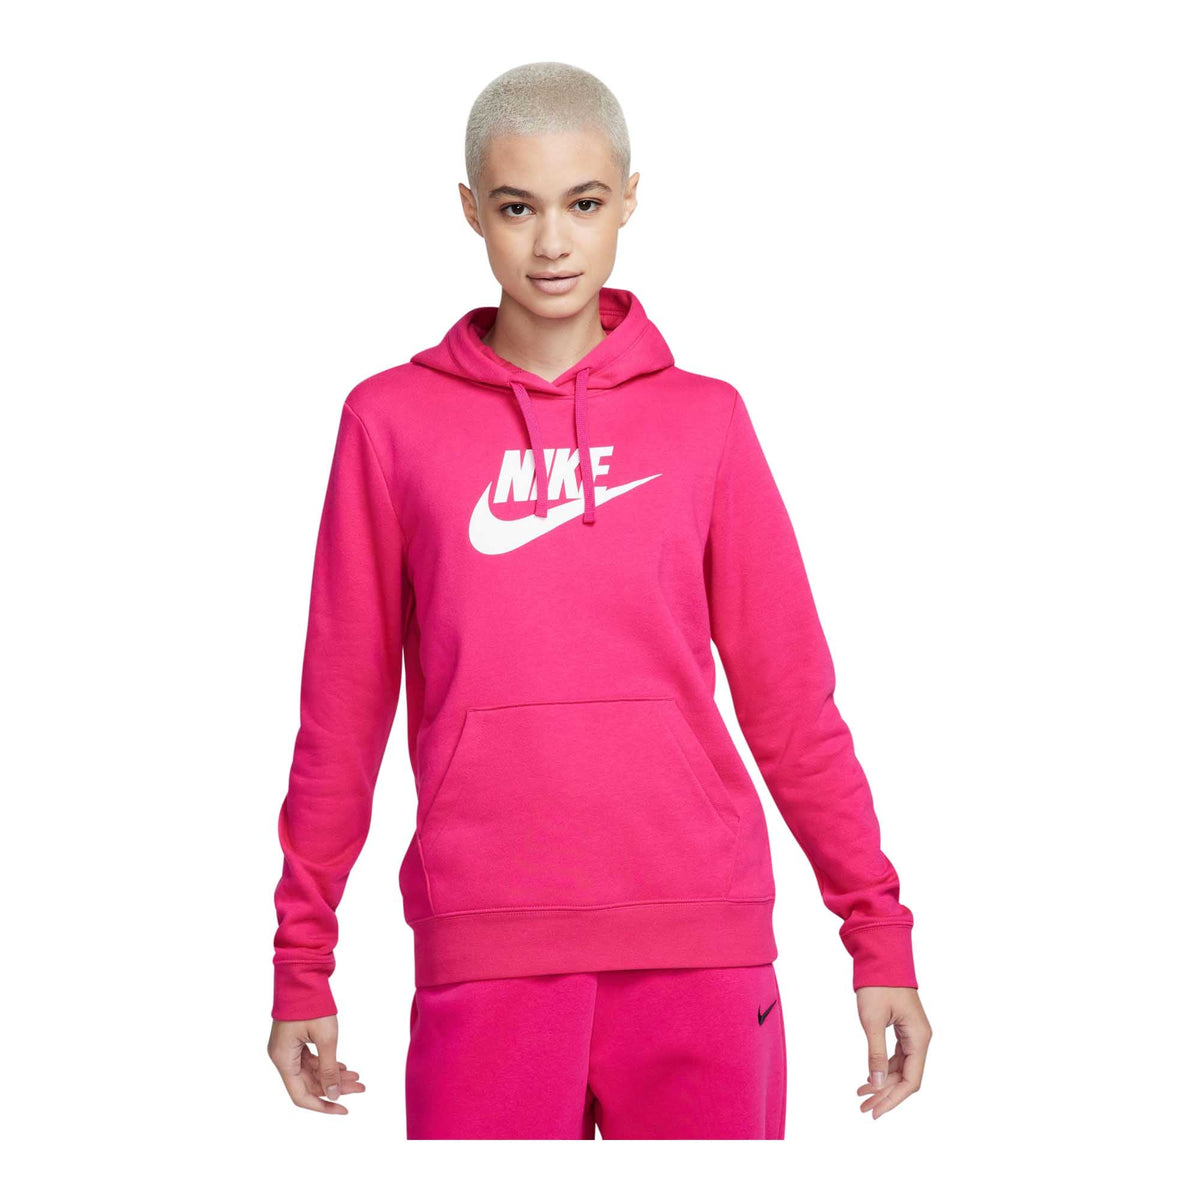 nike huarache 2017 maroon gold pink sneakers Women's Logo Pullover Hoodie